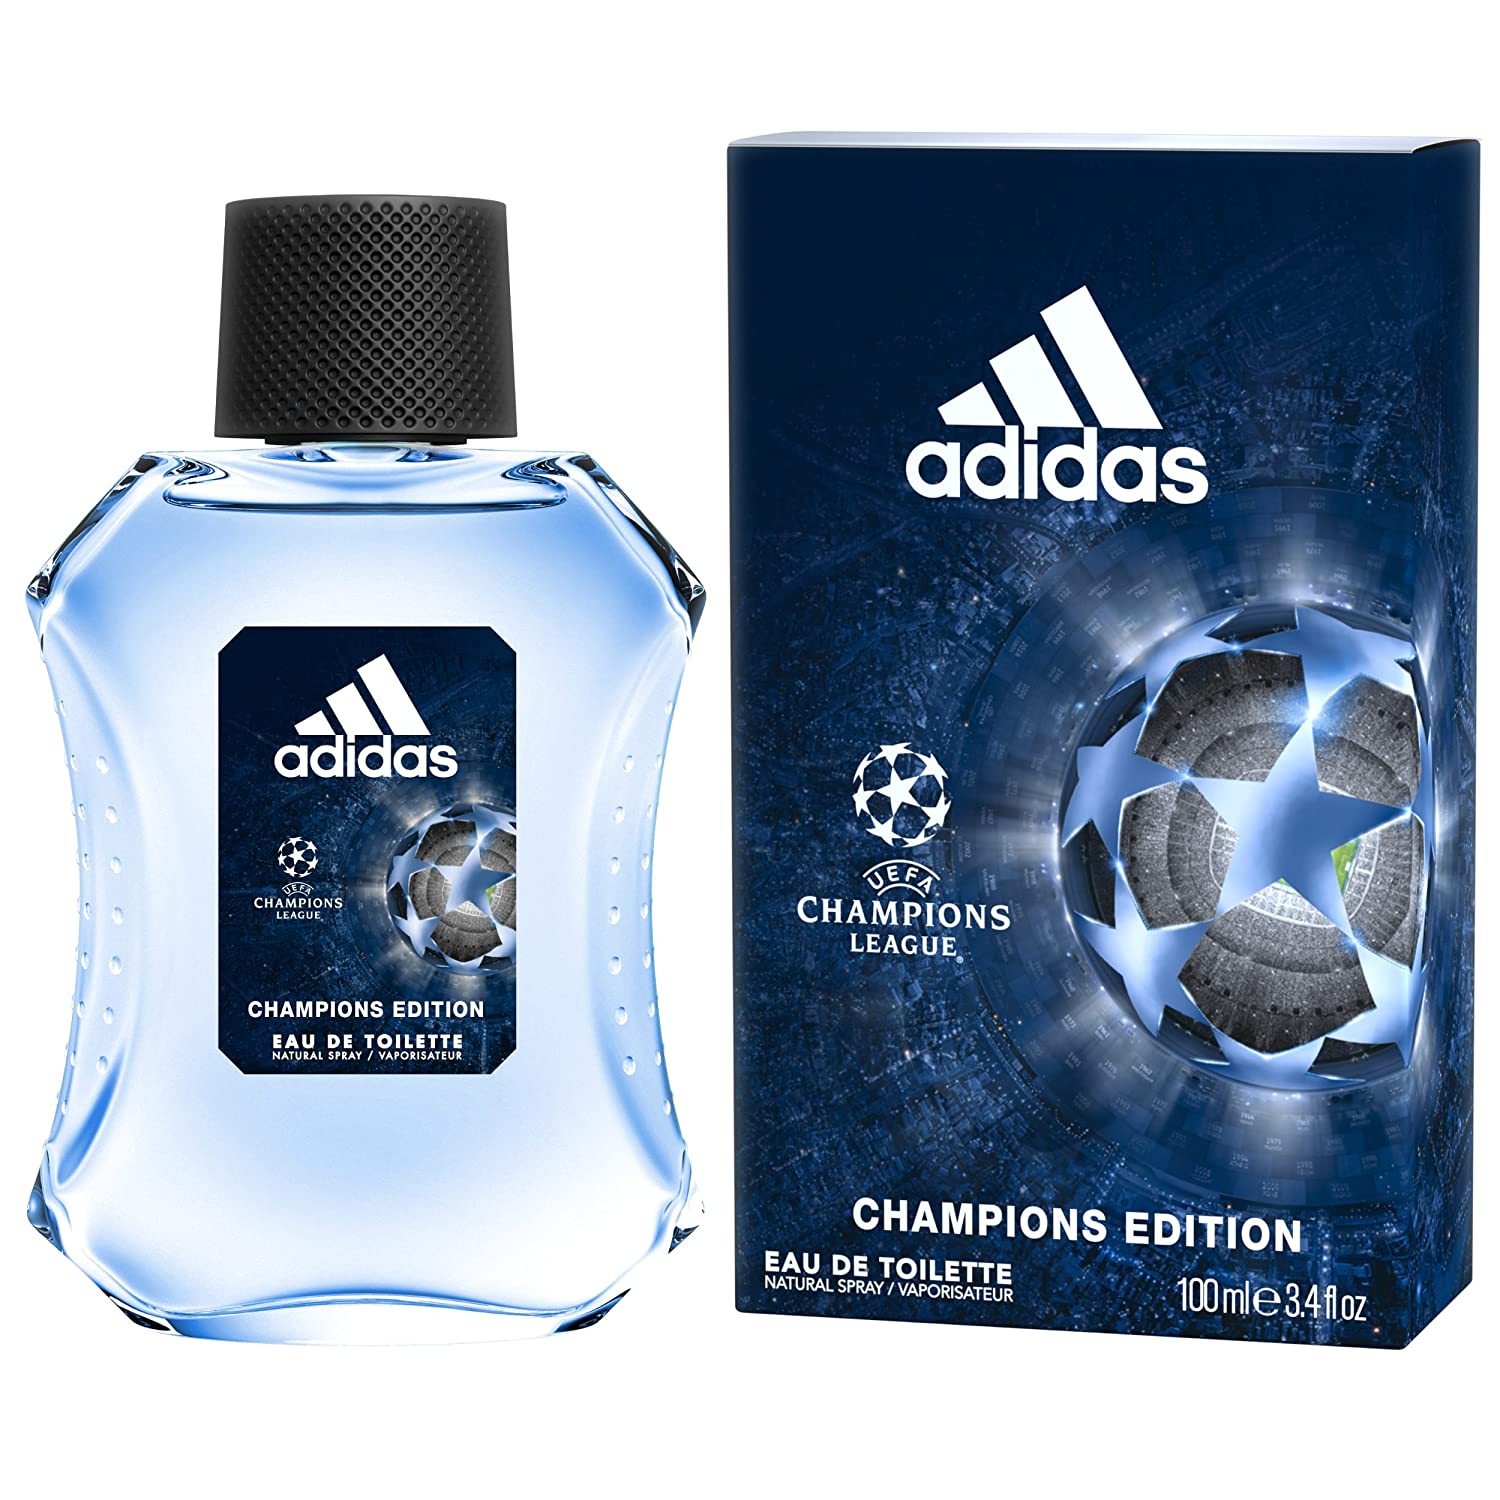 adidas uefa champions league champions edition 100ml edt spray (m)